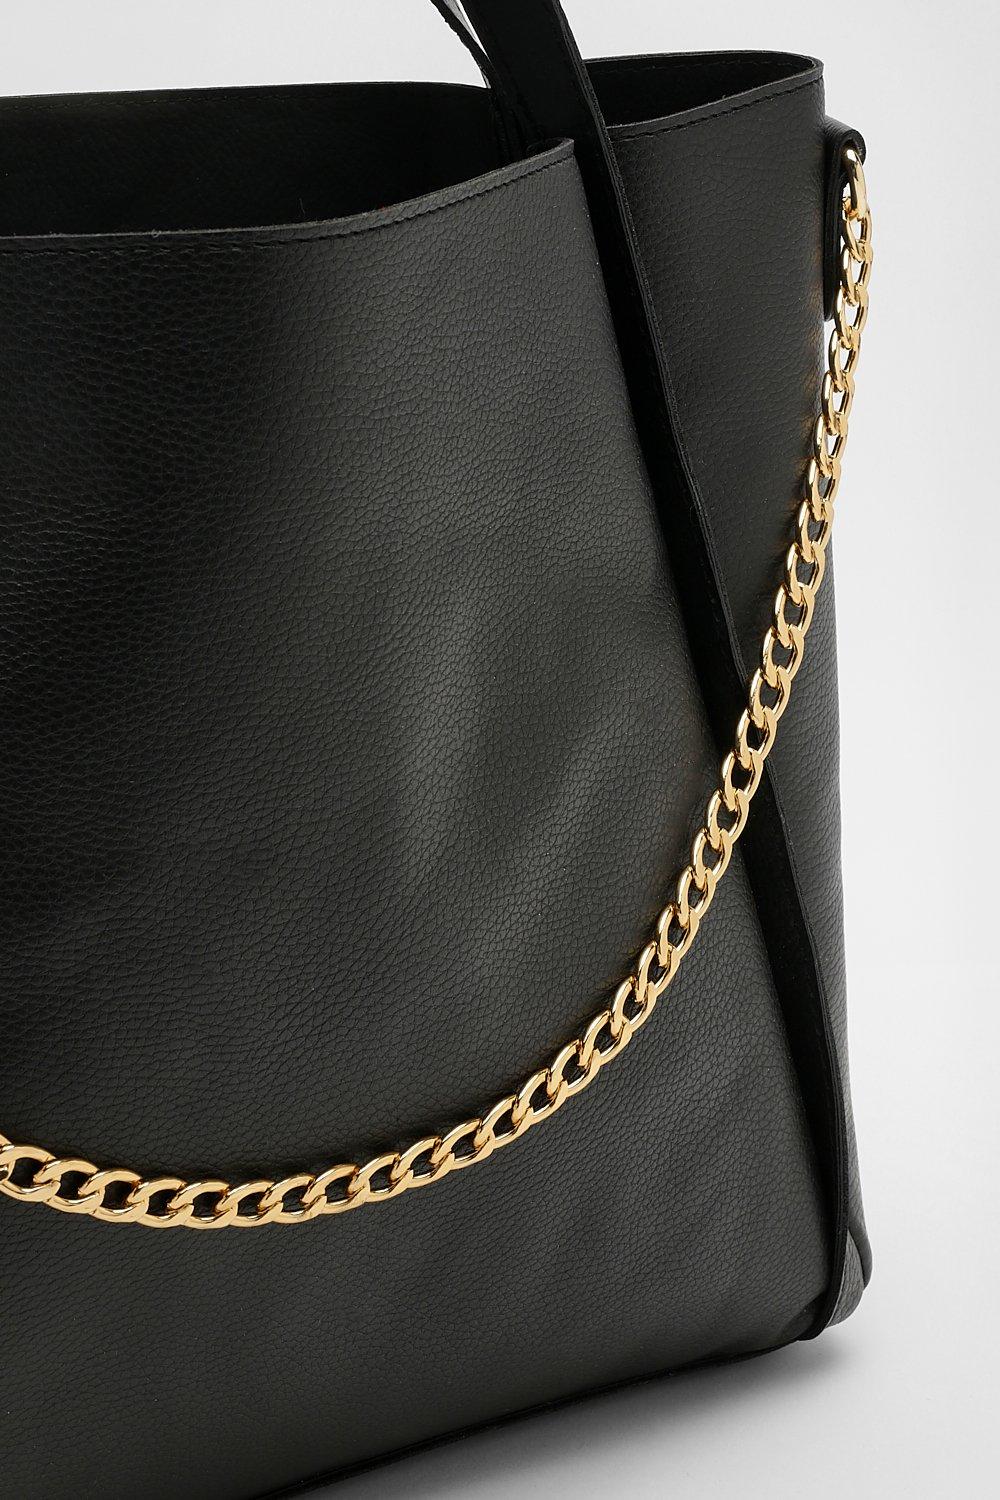 Kara Chain-Strap Knot Tote Bag